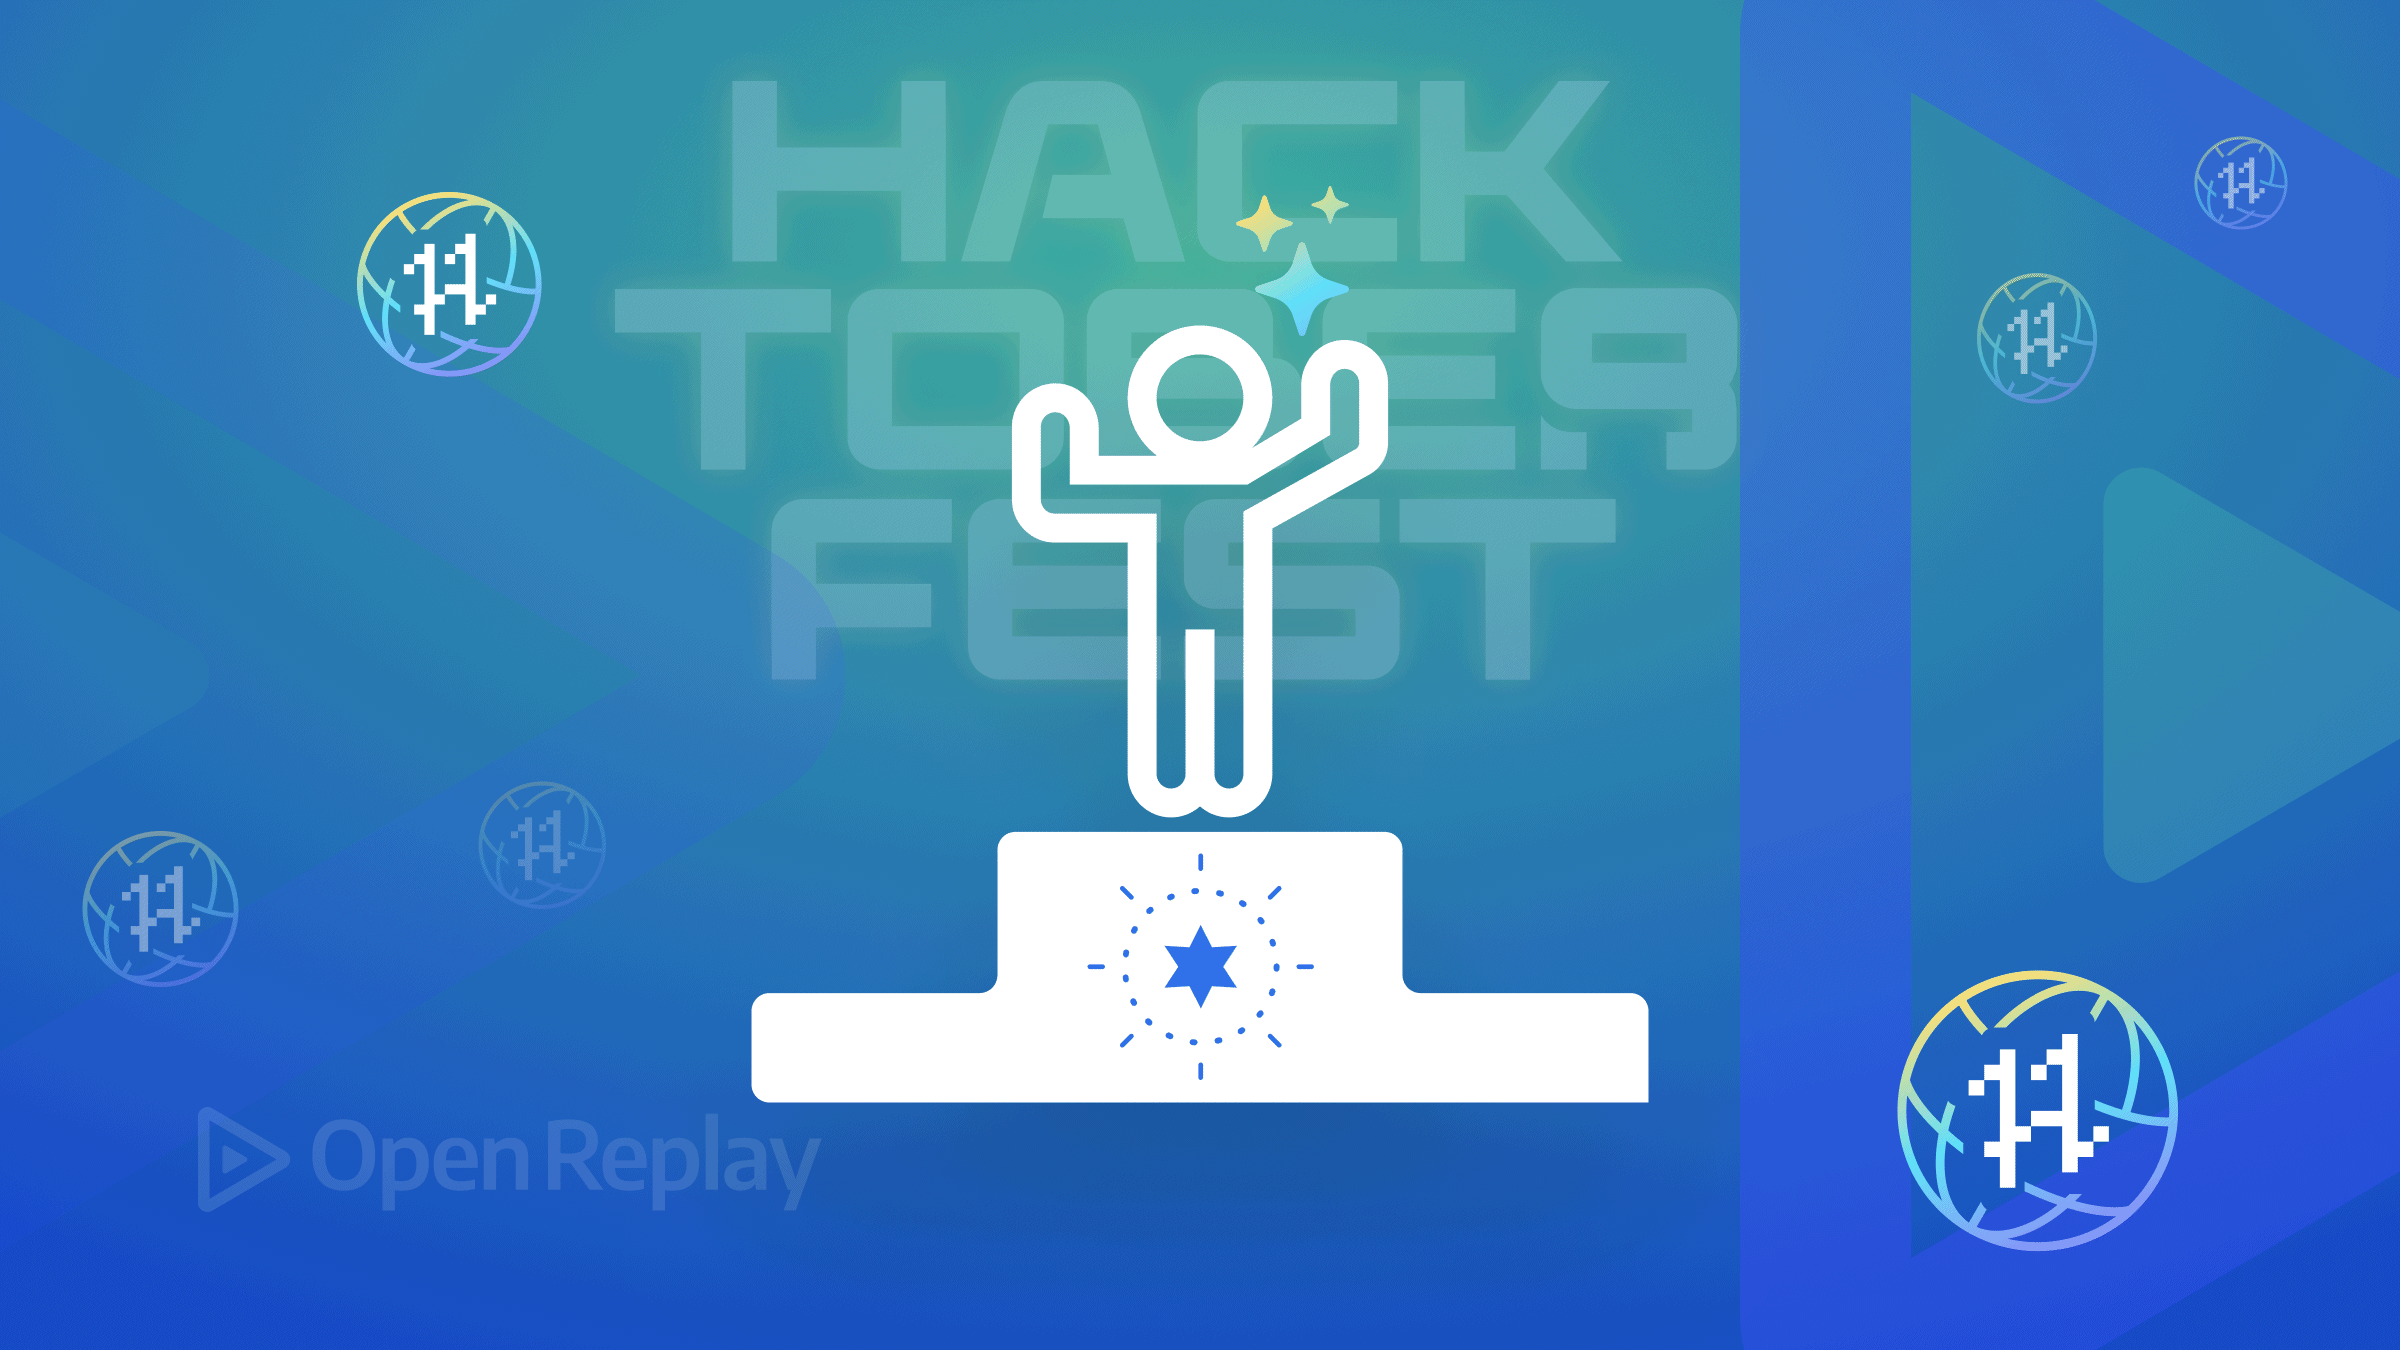 Improve your skills taking part in Hacktoberfest